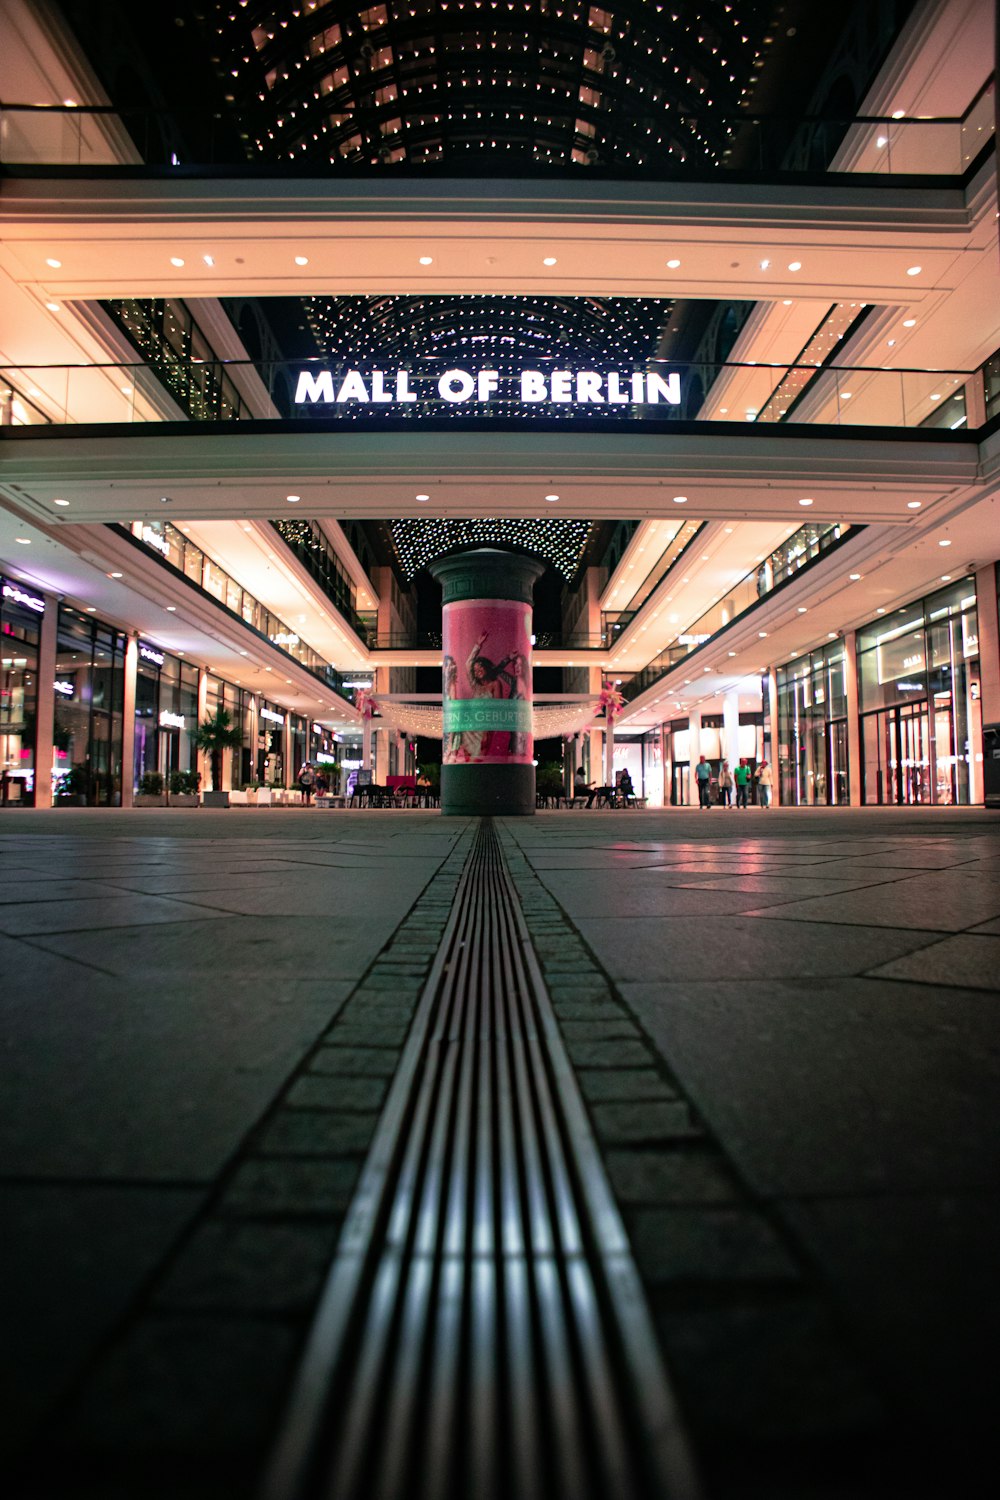 Mall of Berlin at night